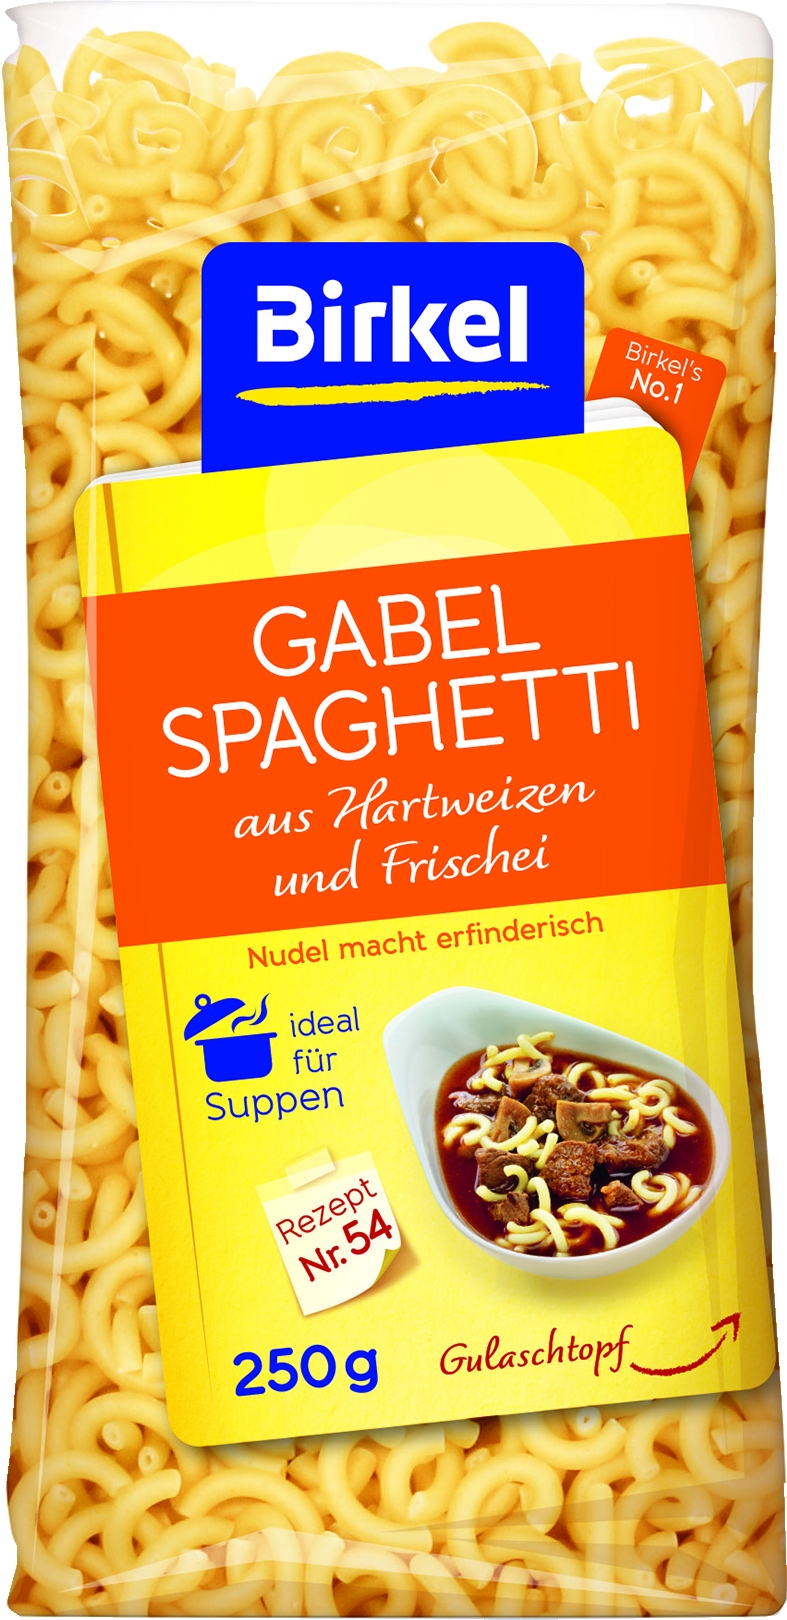 No. 1 Gabelspaghetti